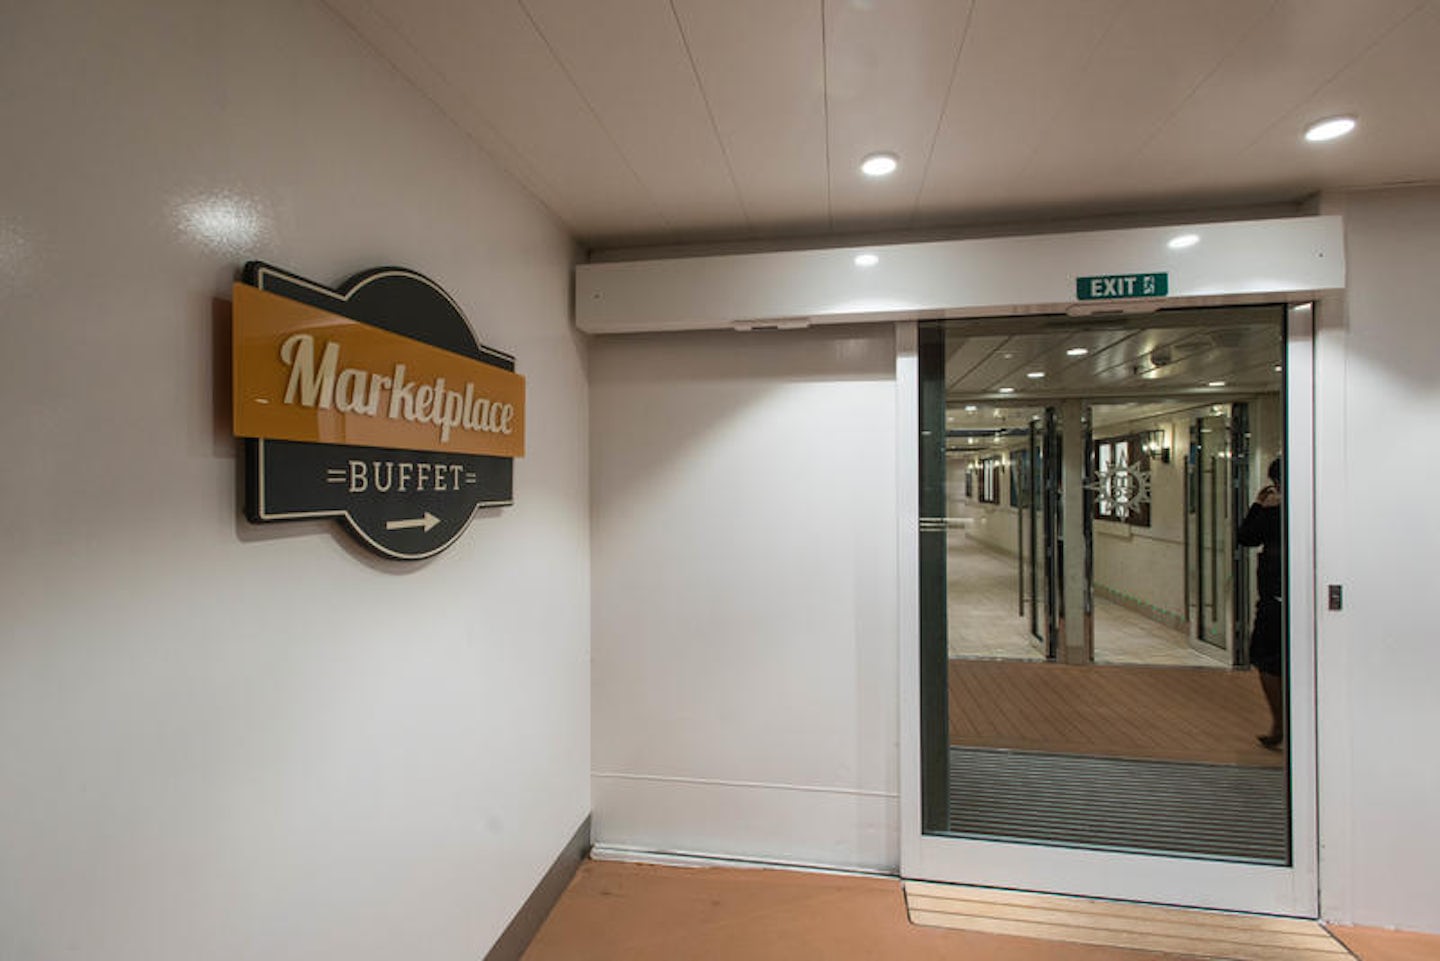 Marketplace Buffet on MSC Meraviglia